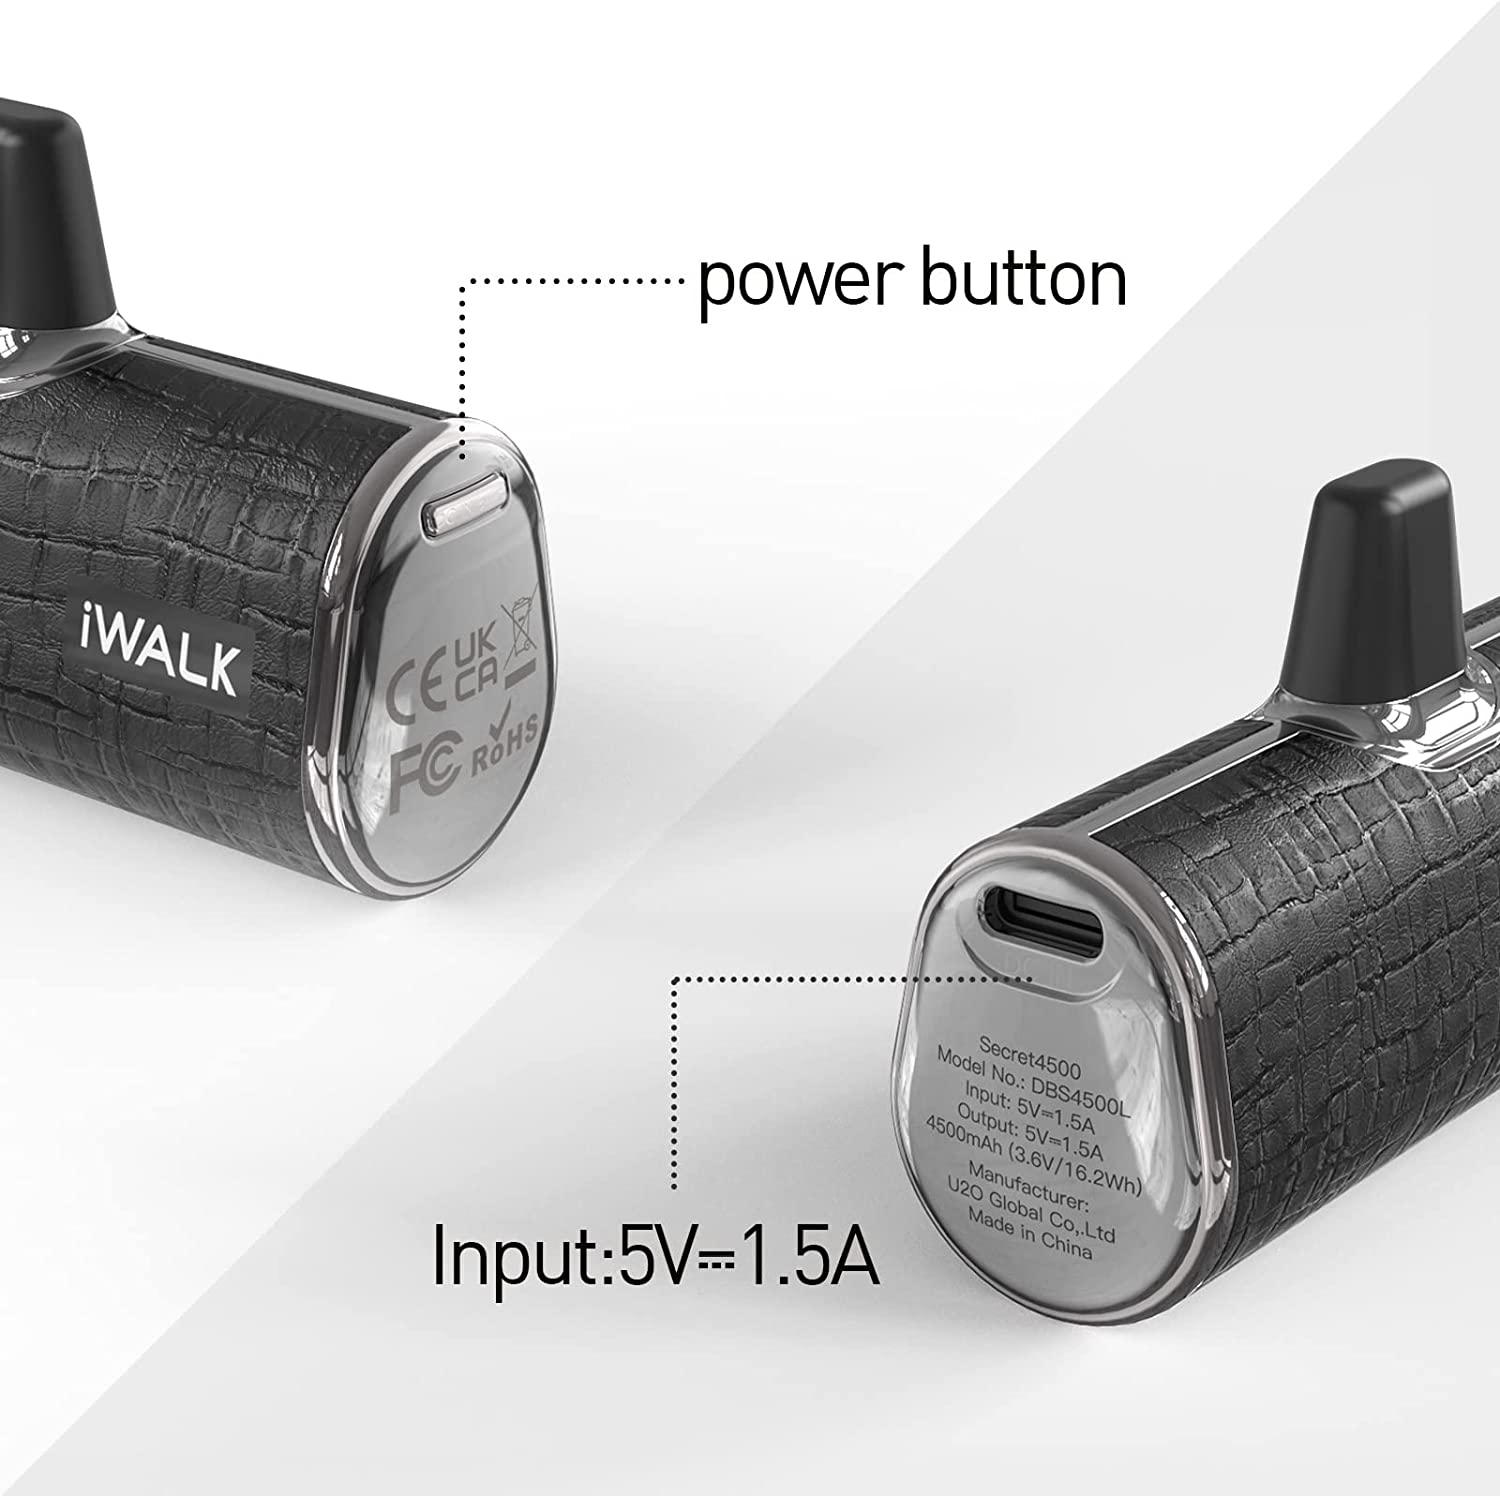 iWalk Linkme Plus Leather Coated Pocket Battery 4500mAh For iPhone - Black